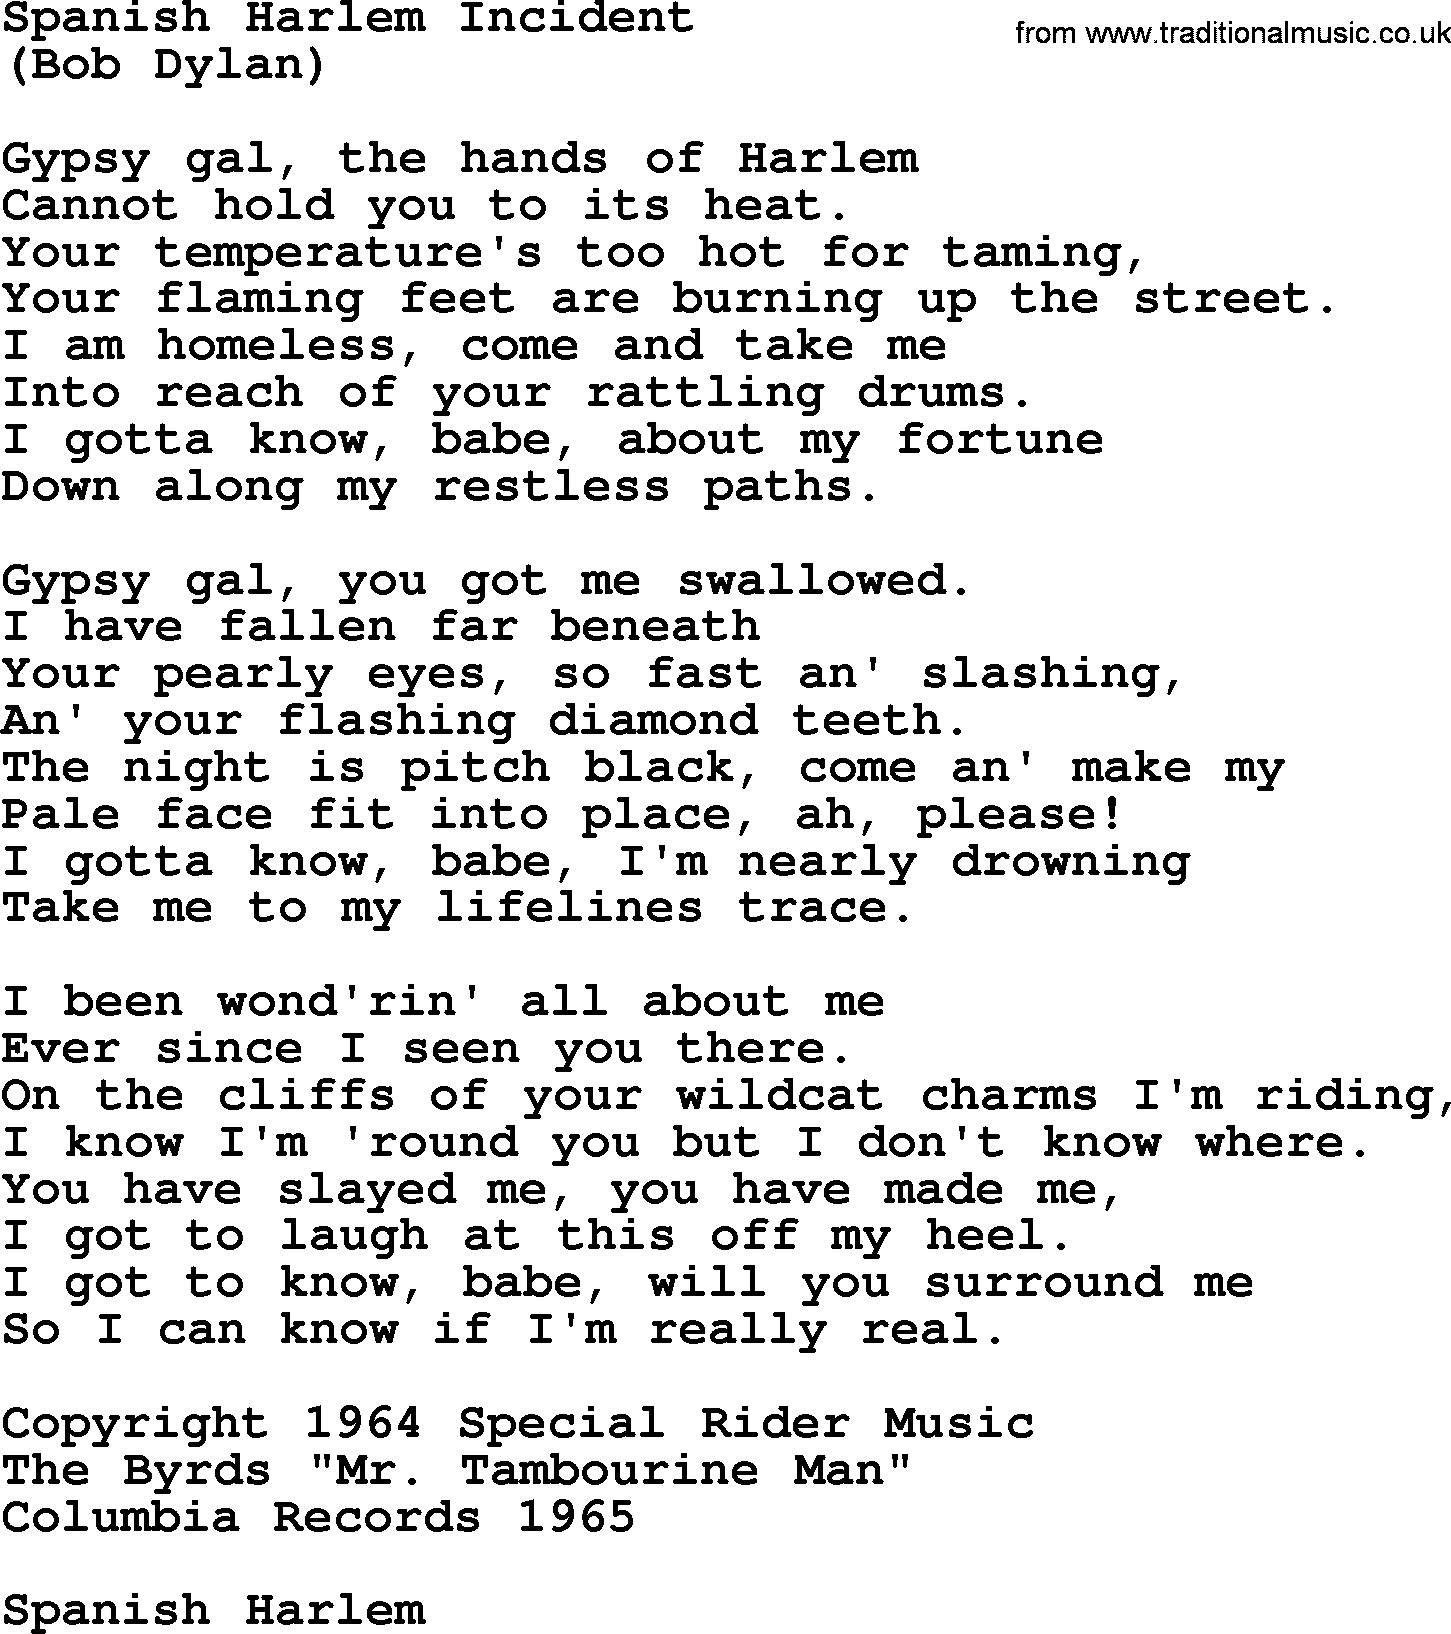 The Byrds song Spanish Harlem Incident, lyrics